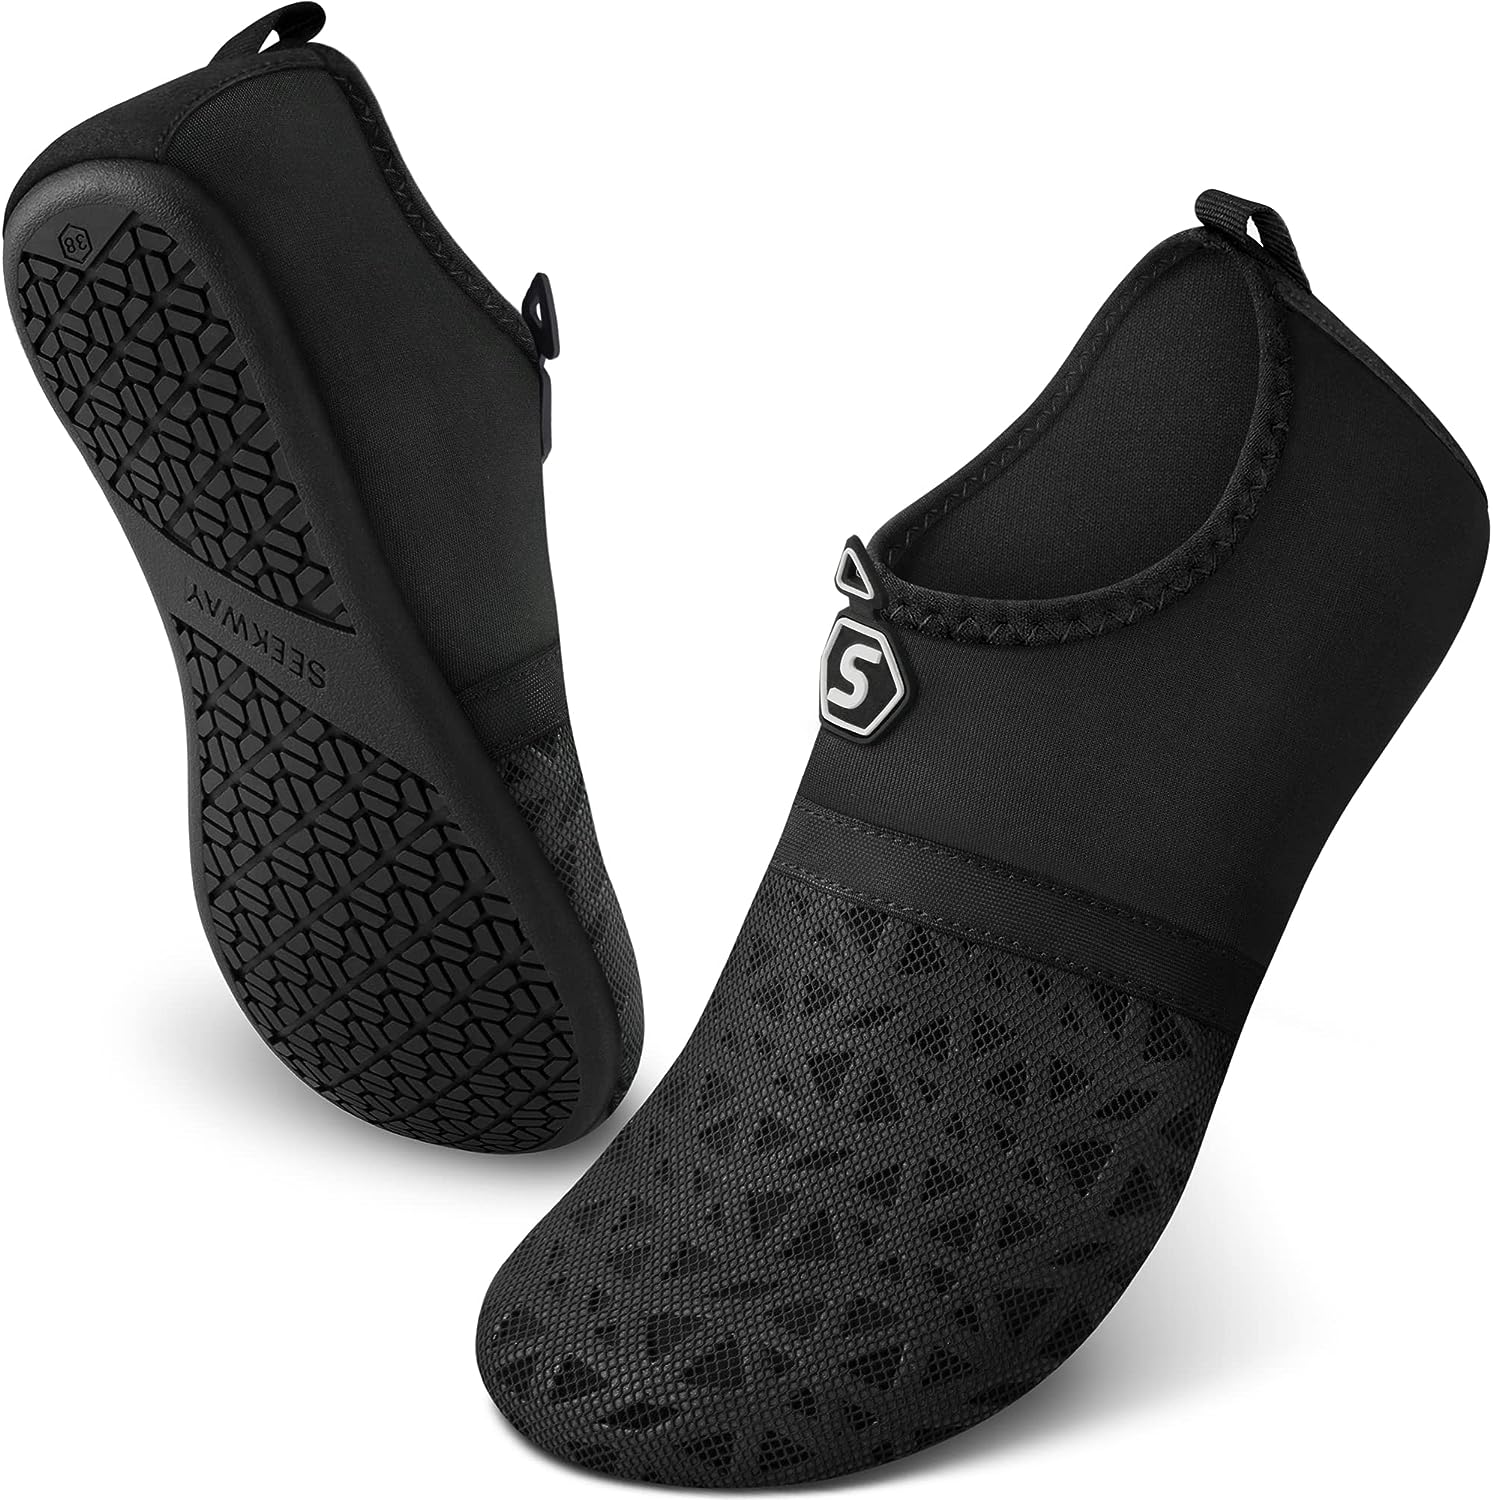 SEEKWAY Water Shoes Barefoot Aqua Socks Quick-Dry Non [...]